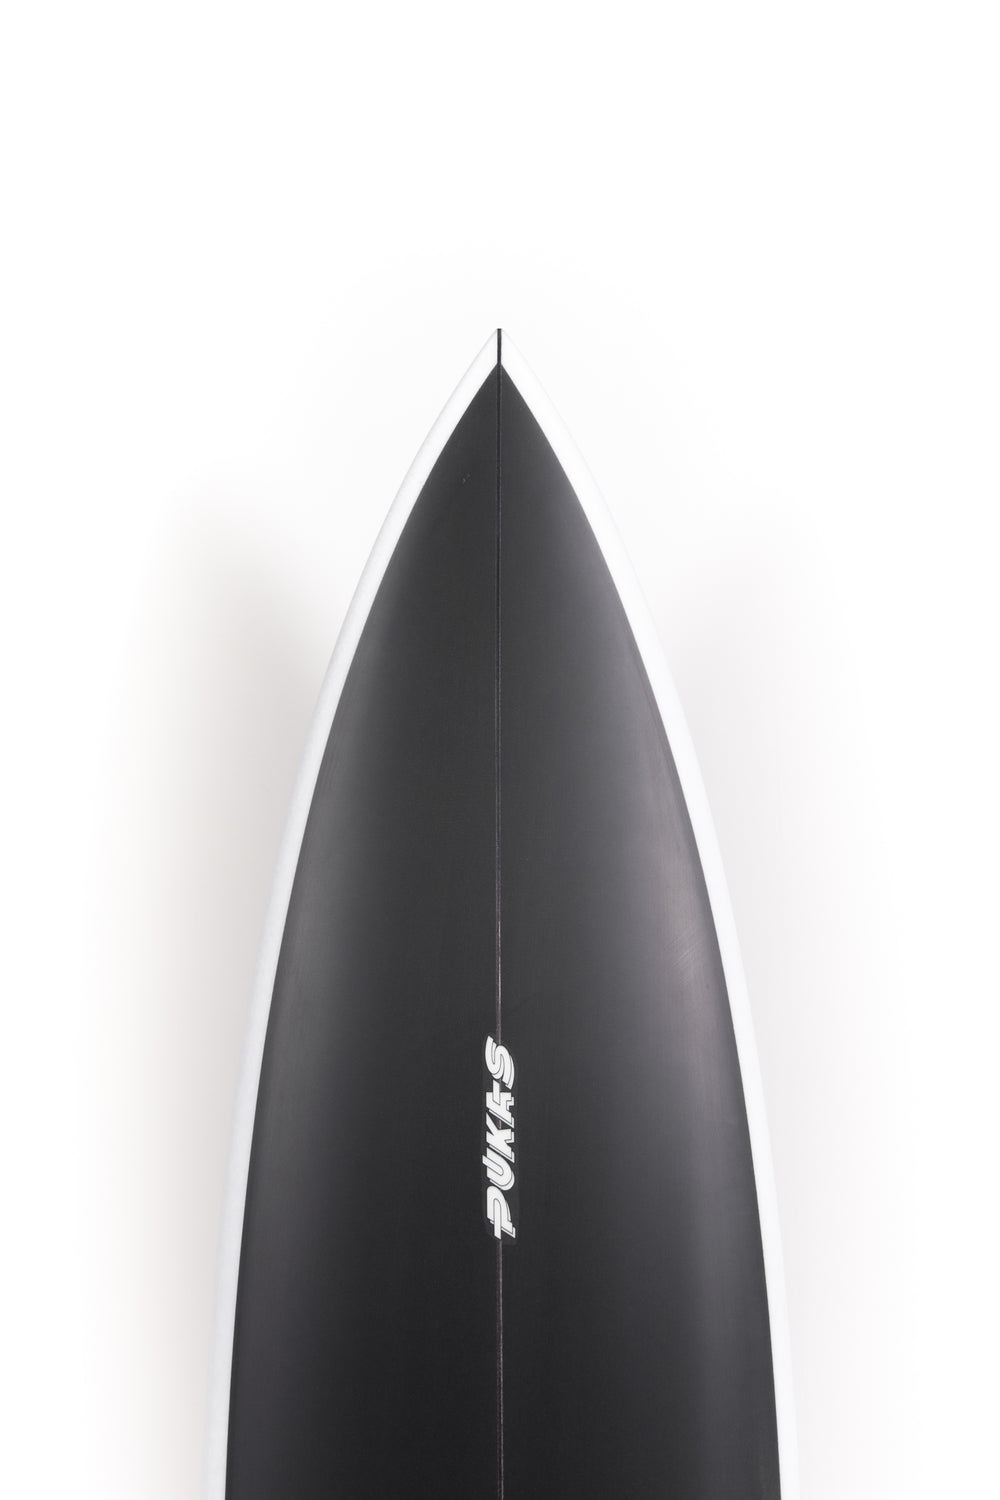 Pukas Surfboard - WATER LION ULTRA by Chris Christenson - 6'5” x 